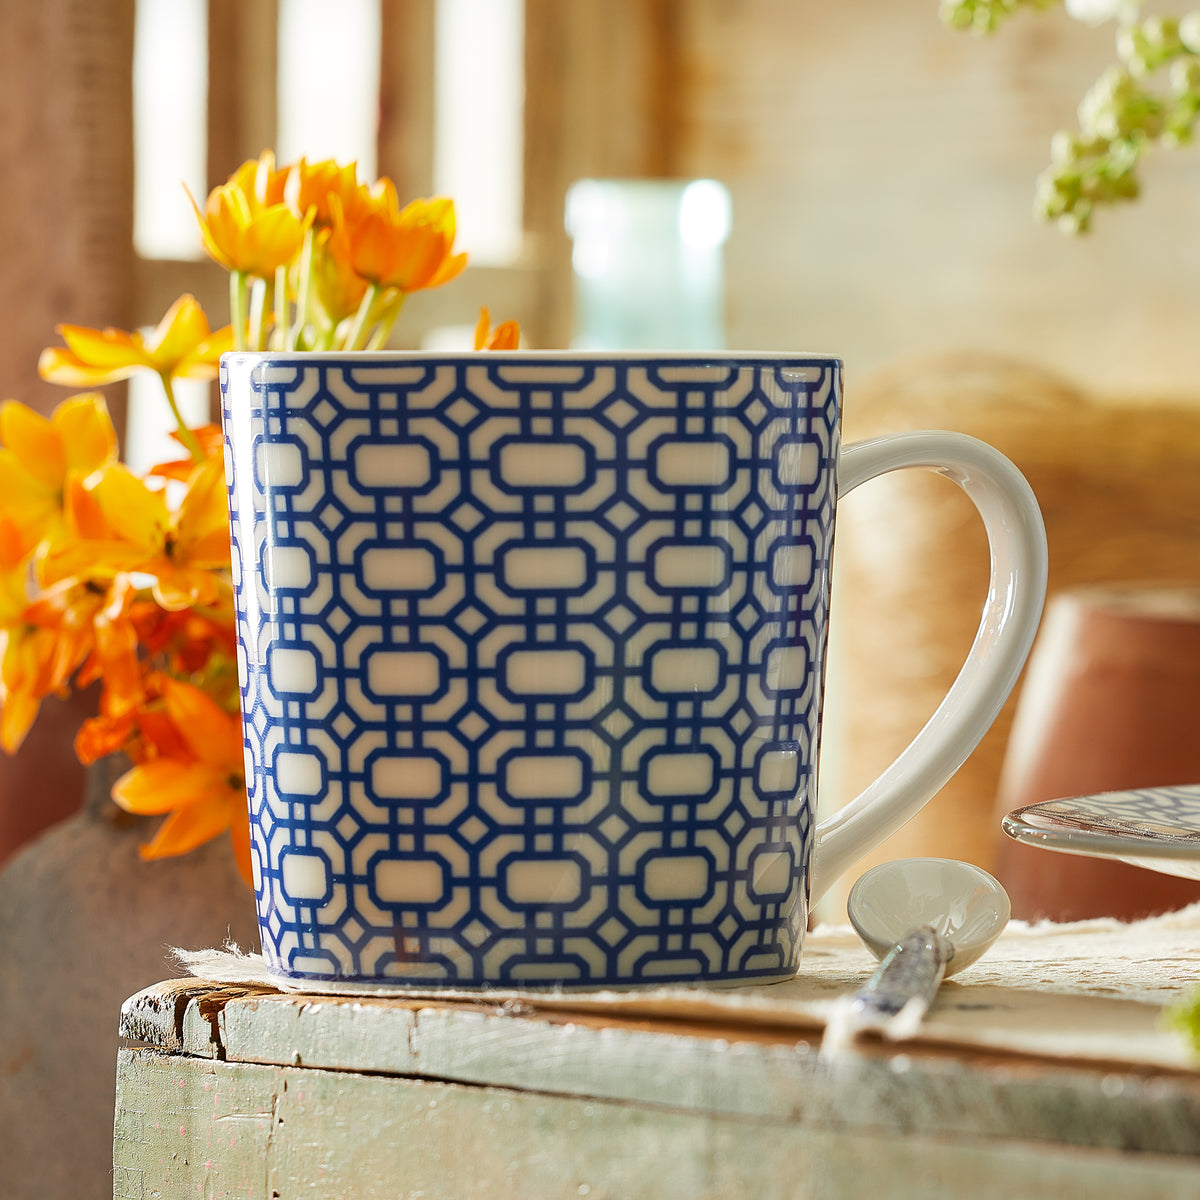 A Newport Garden Gate Mug Blue by Caskata Artisanal Home on a table.